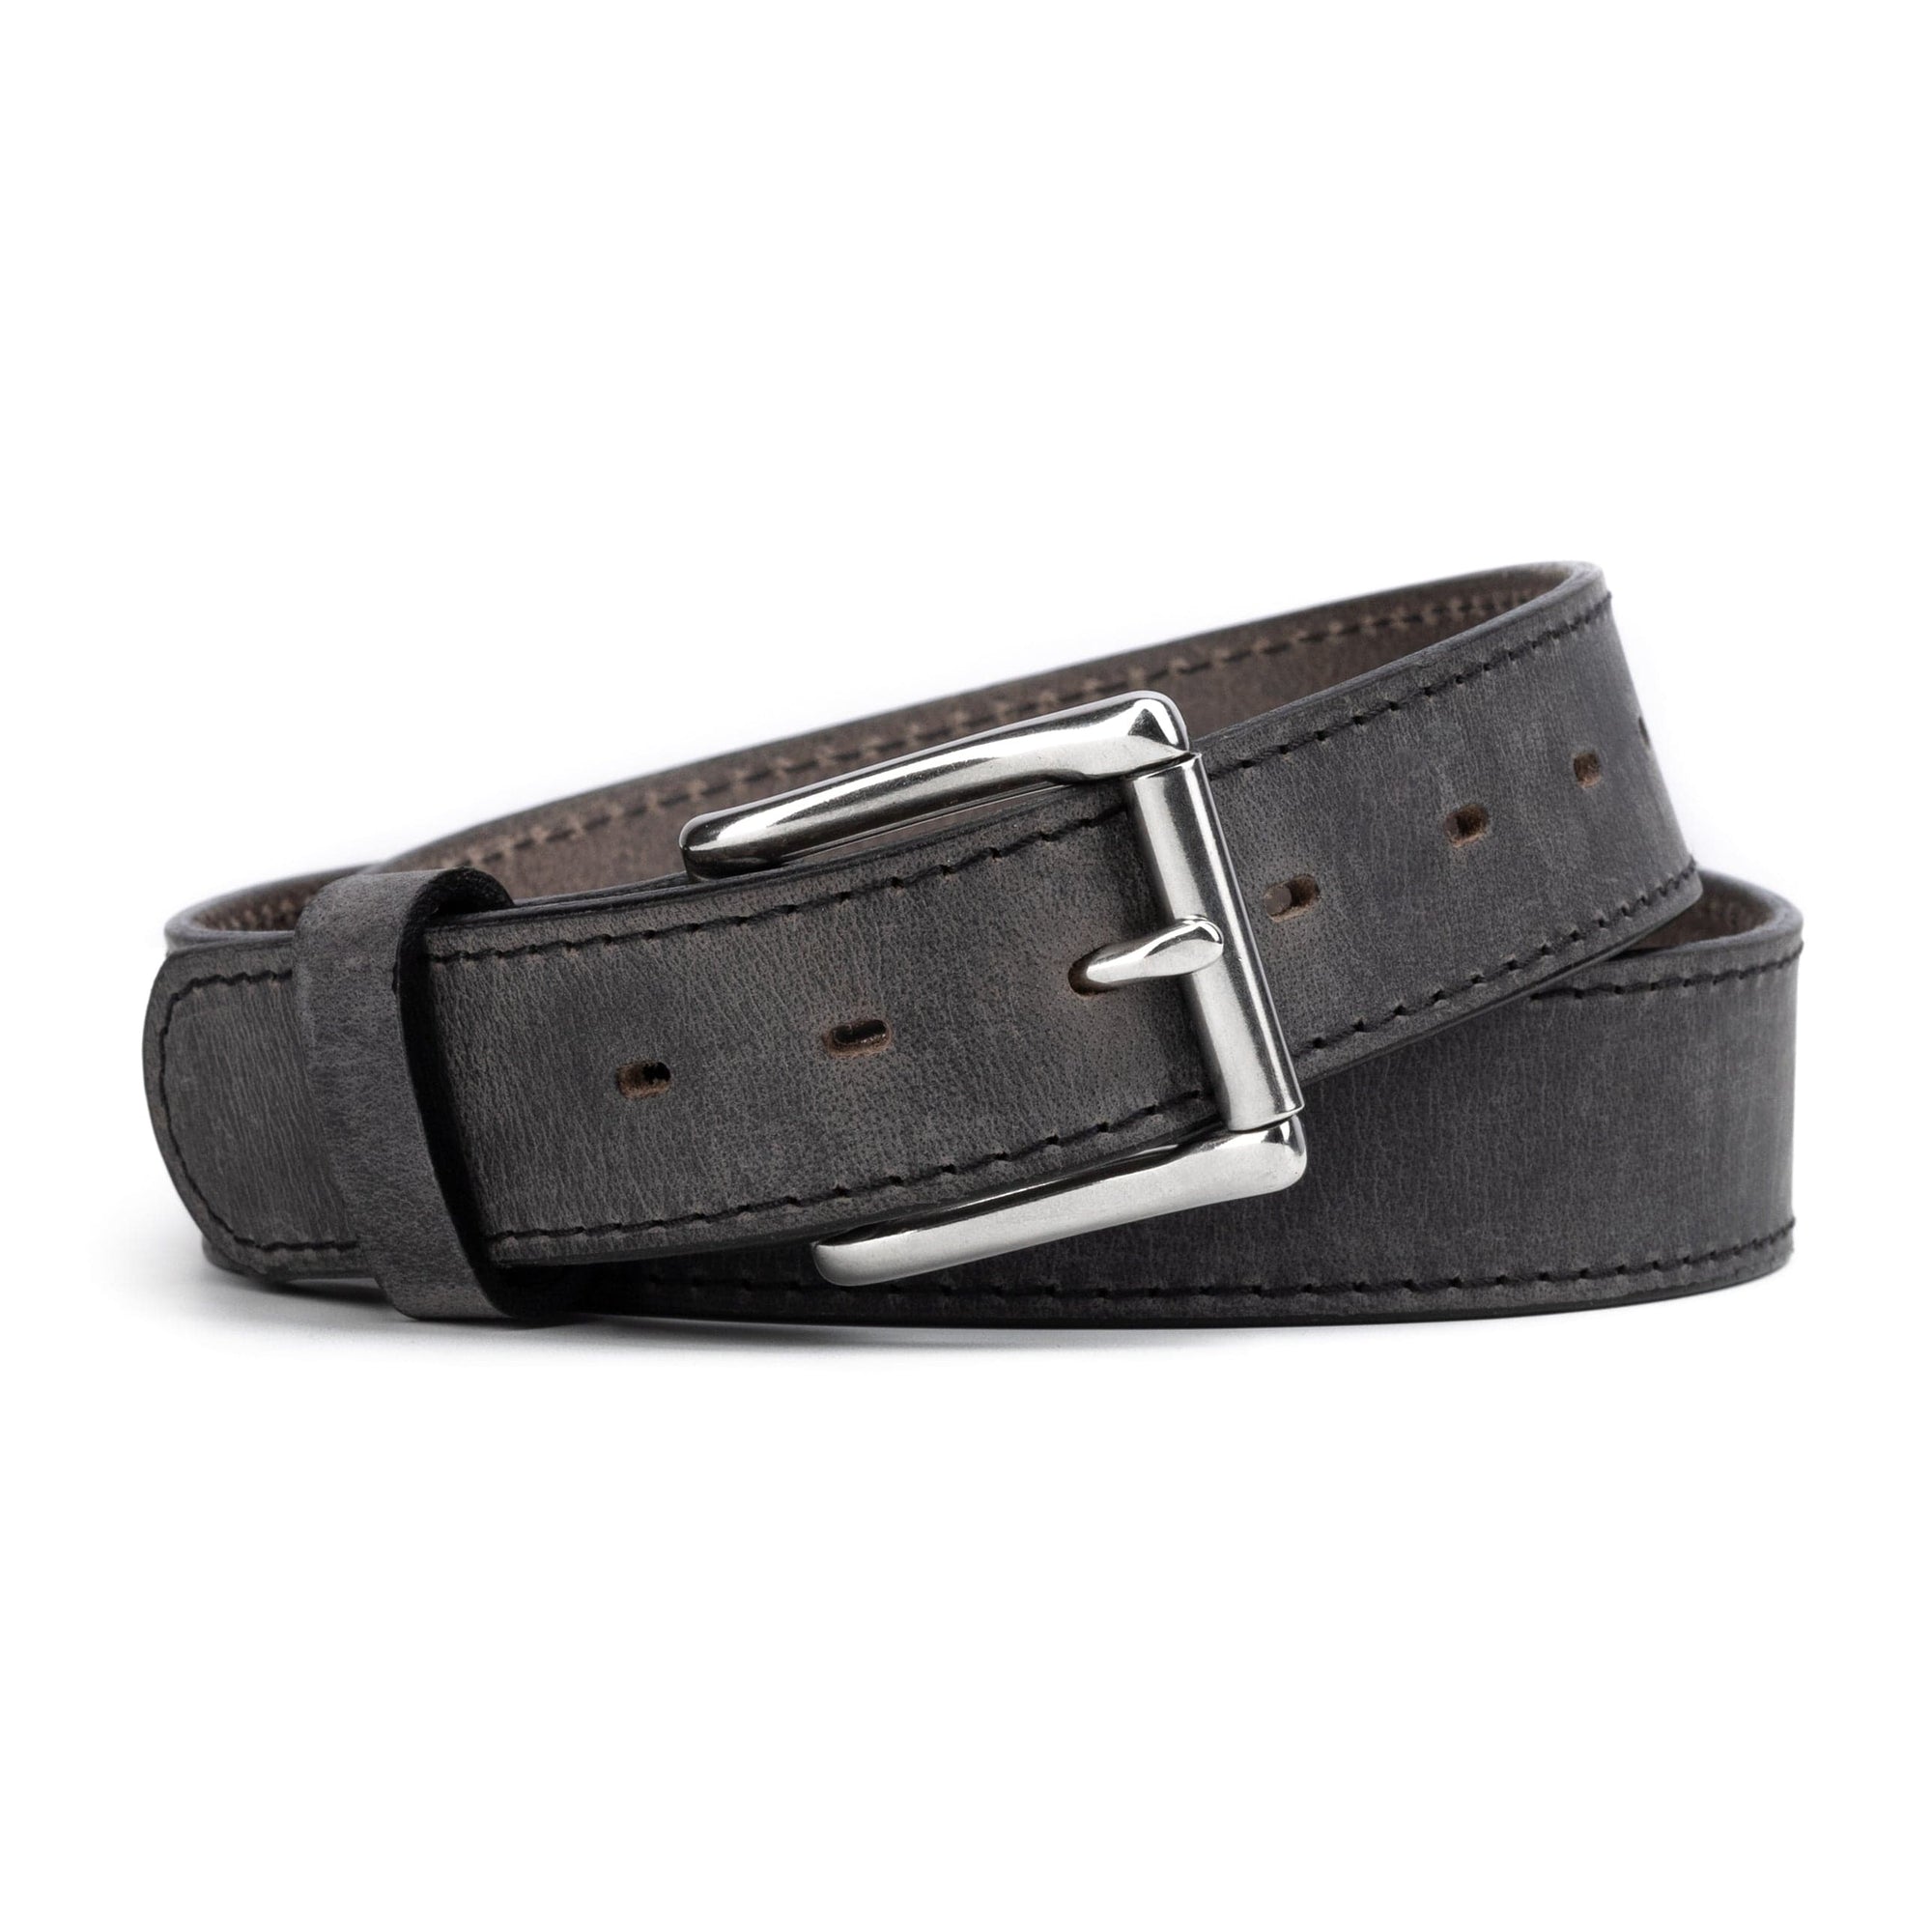 Smokey Gold Slant Shape Buckle With Mini Lion Black Leather Belt For Men By Brune & Bareskin 36